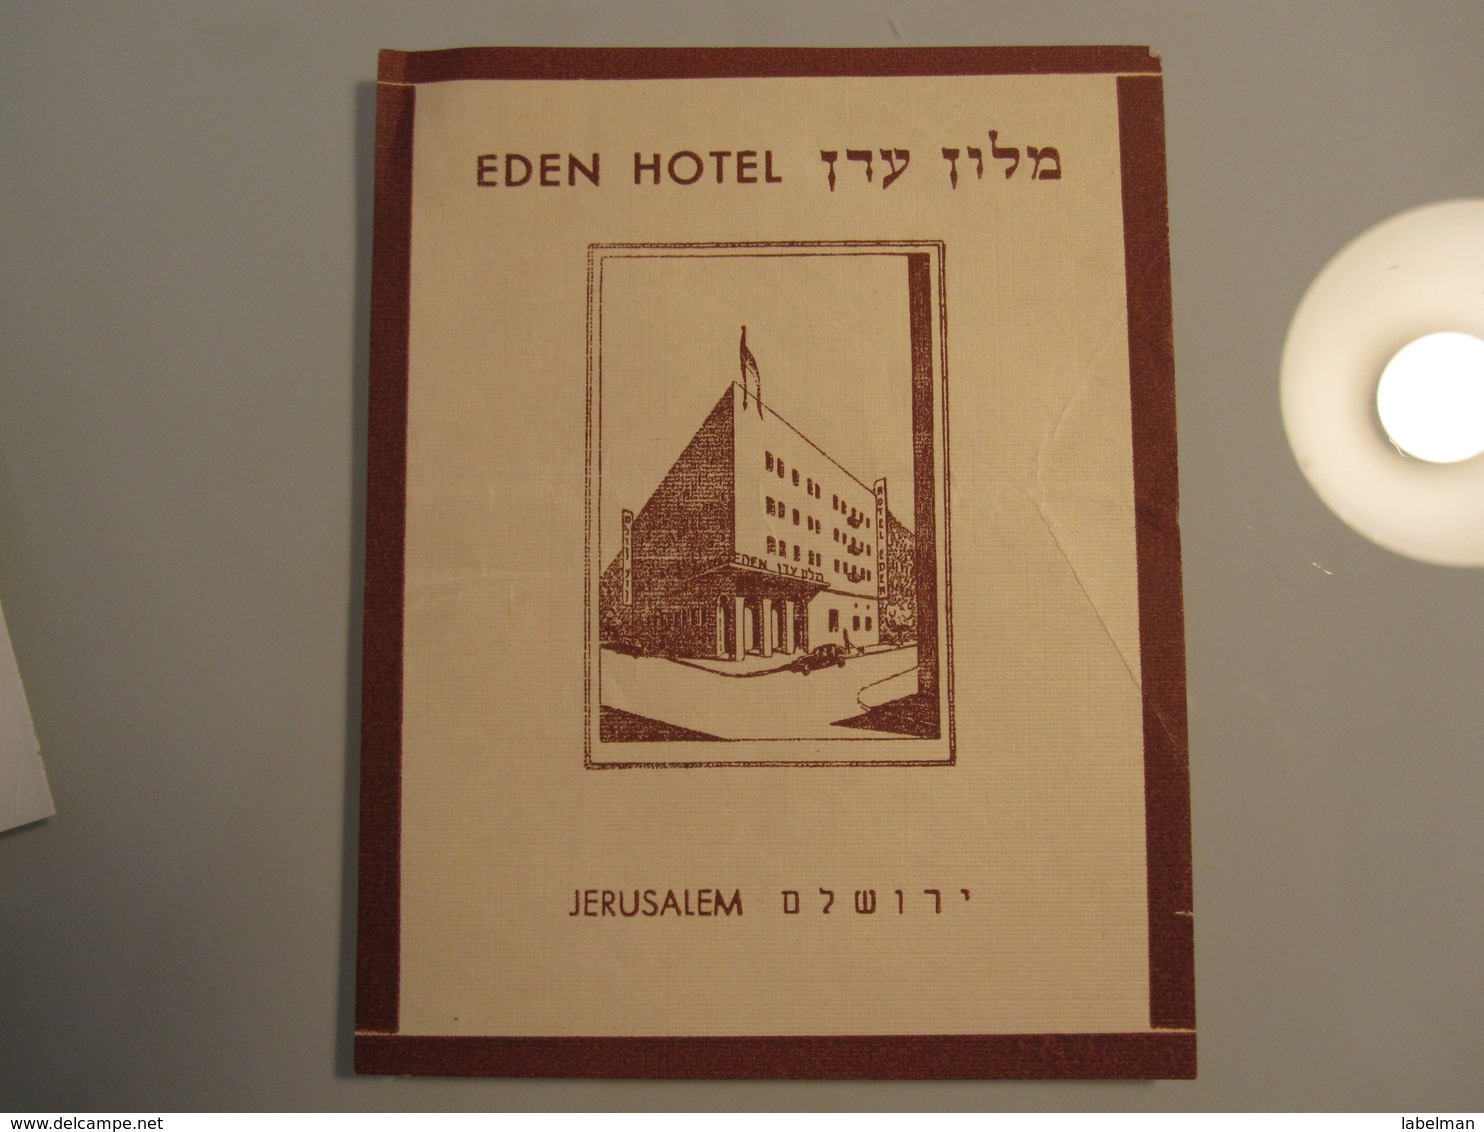 HOTEL MOTEL PENSION EDEN JERUSALEM PALESTINE ISRAEL TAG STICKER DECAL LUGGAGE LABEL ETIQUETTE AUFKLEBER - Etiketten Van Hotels